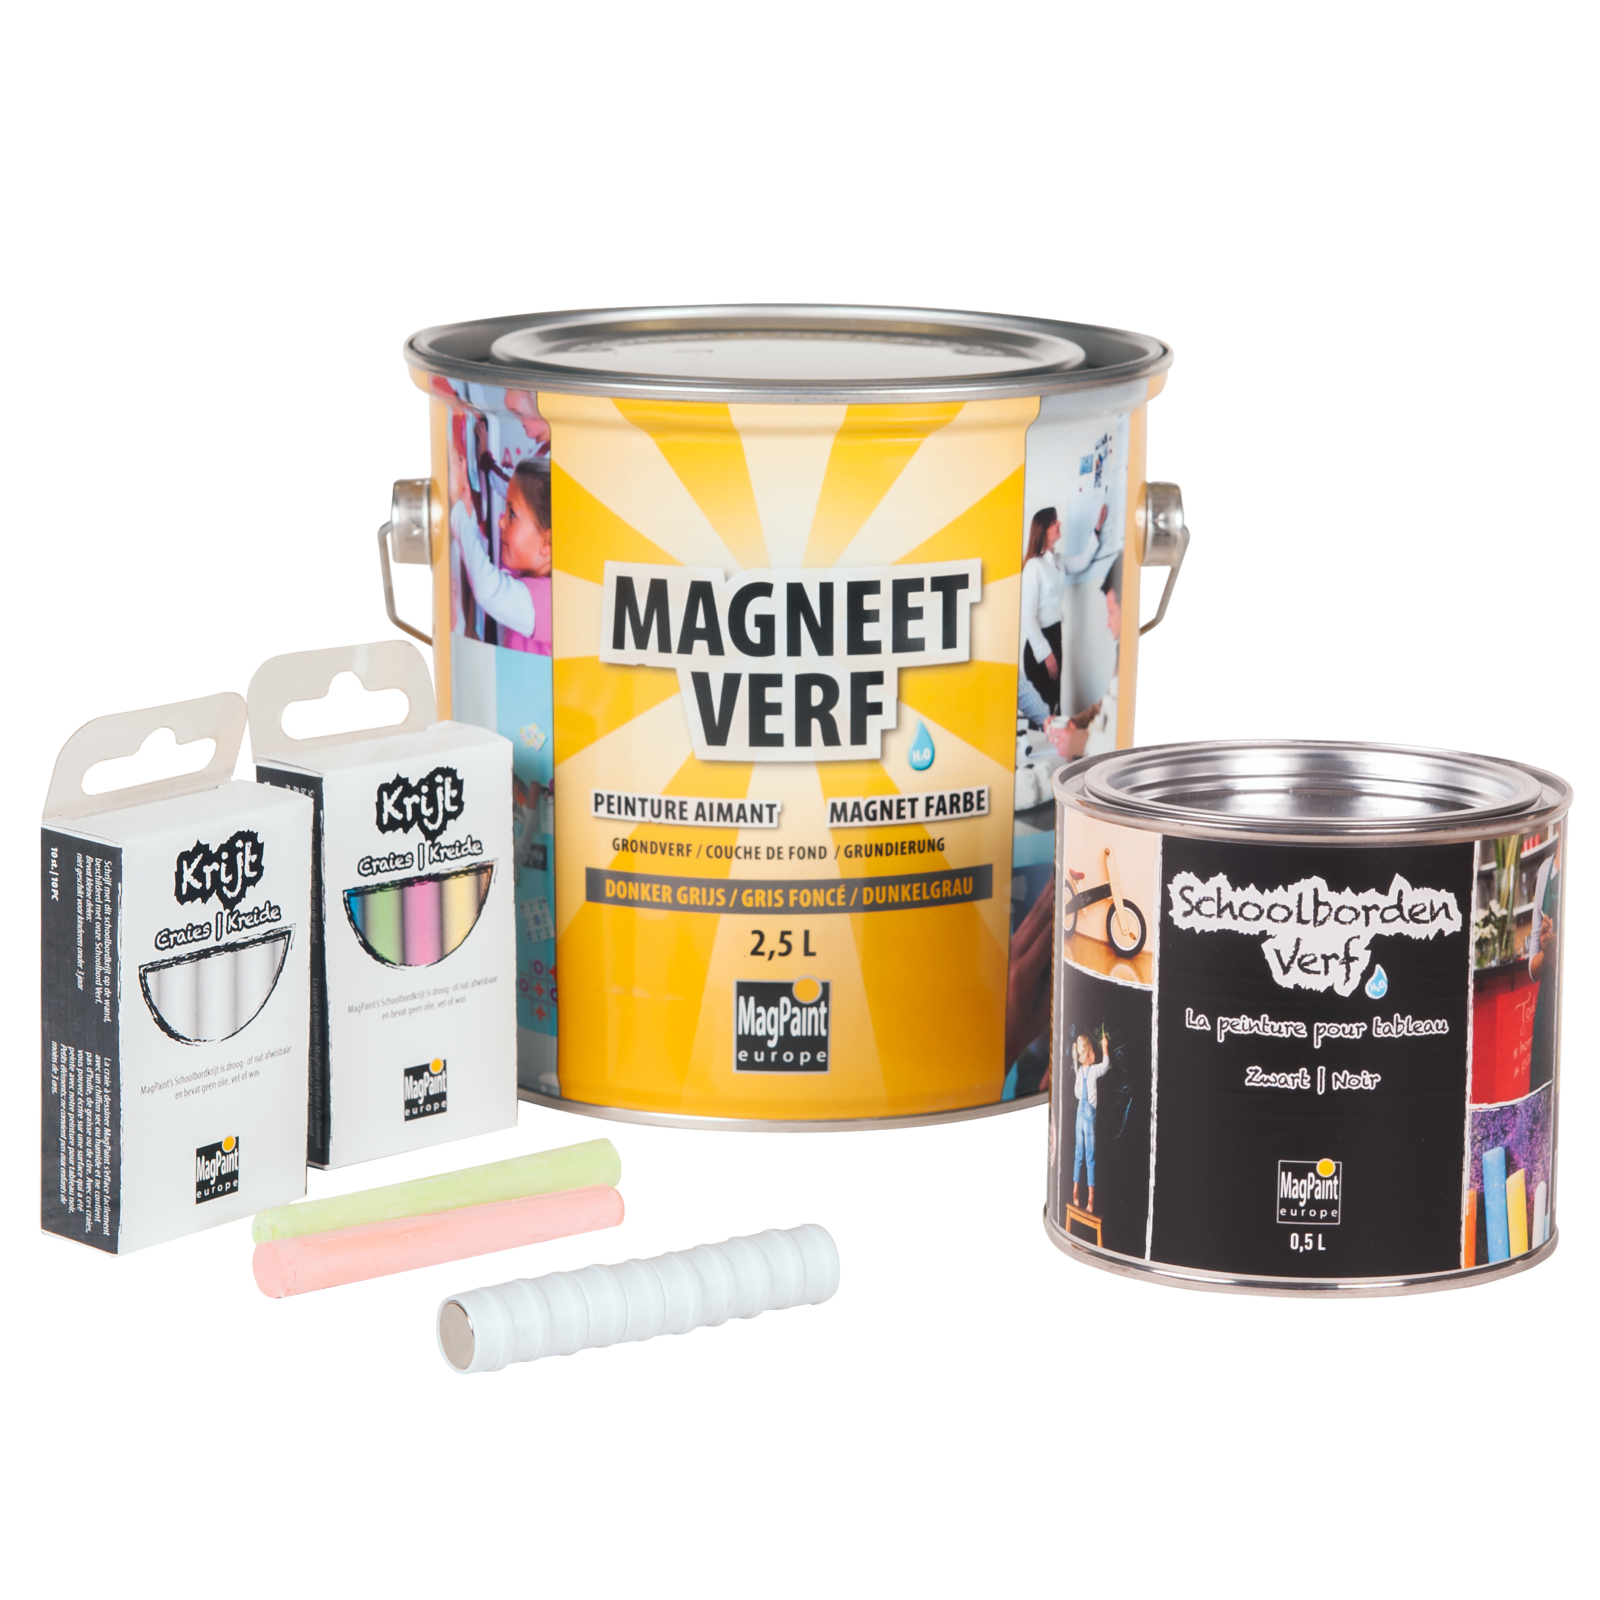 Arne mist Blokkeren Set: Magneetverf 2,5L, Schoolbordverf zwart 0,5L, krijt & magneten -  Magneetverf